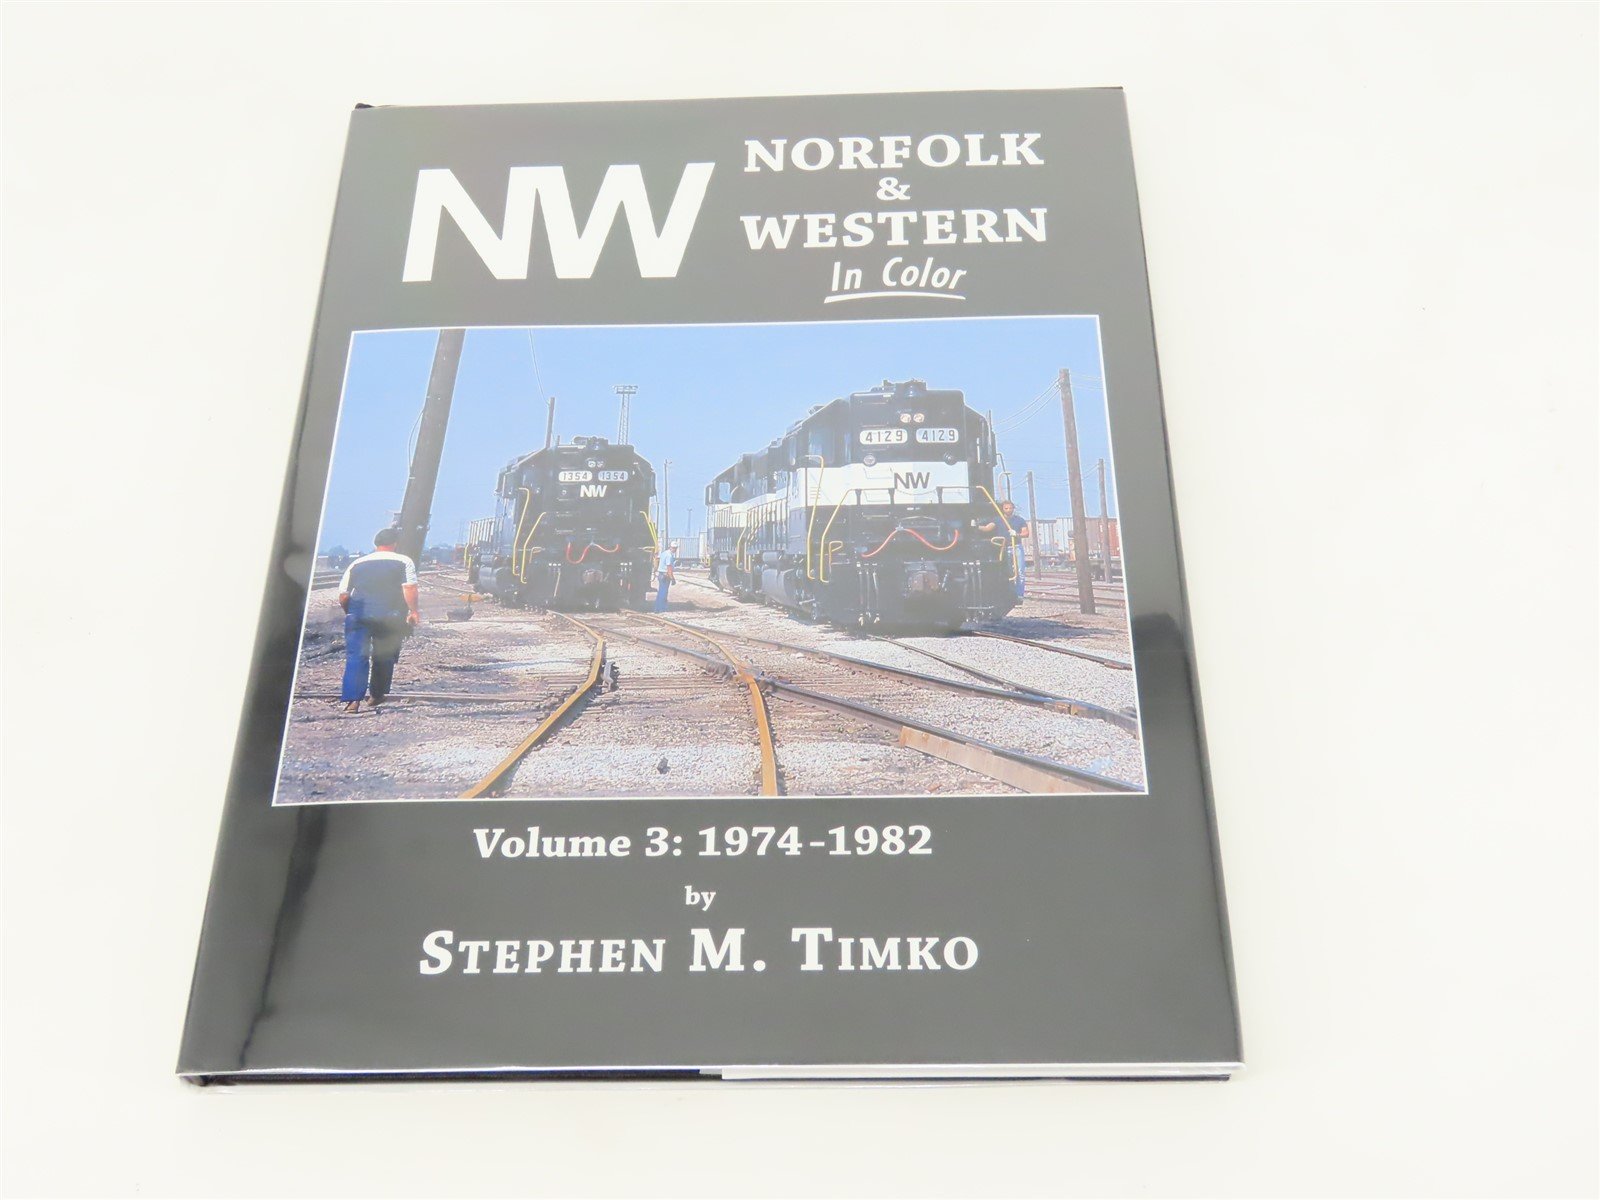 Morning Sun: Norfolk & Western Volume 3: 1974-1982 by Stephen M. Timko ©2011 HC